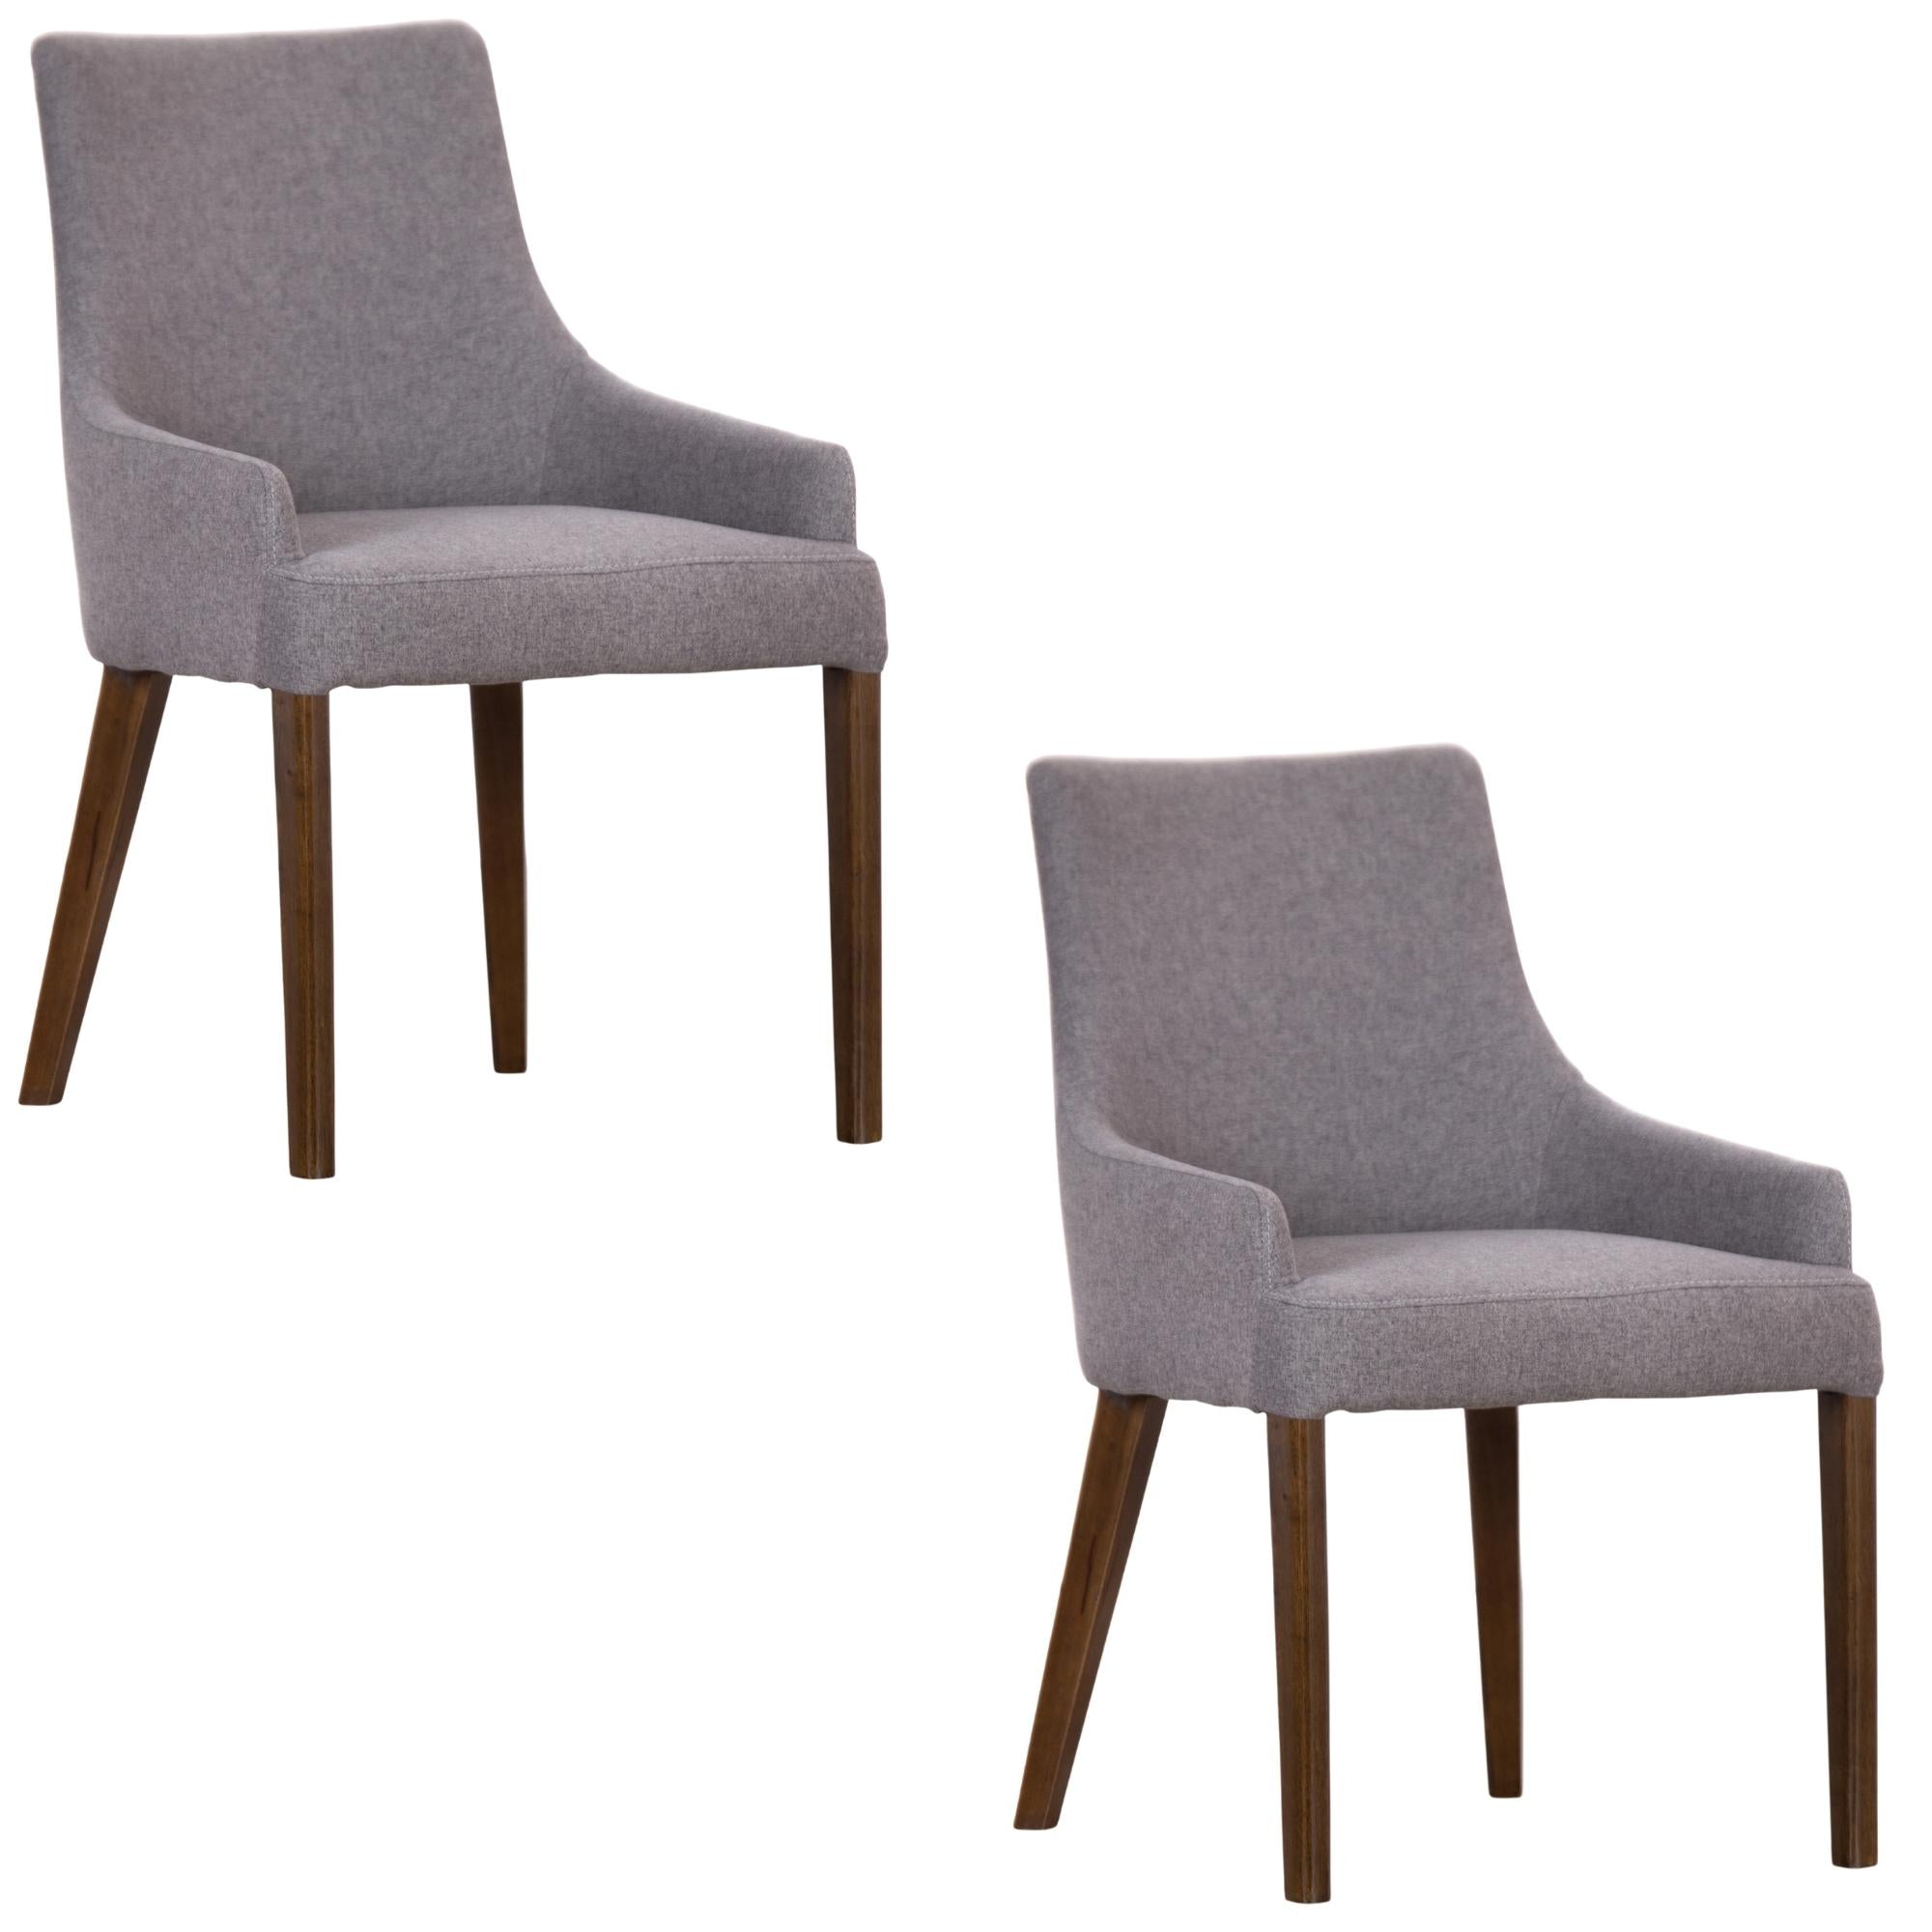 tuberose-dining-chair-set-of-2-fabric-seat-solid-acacia-wood-furniture-grey